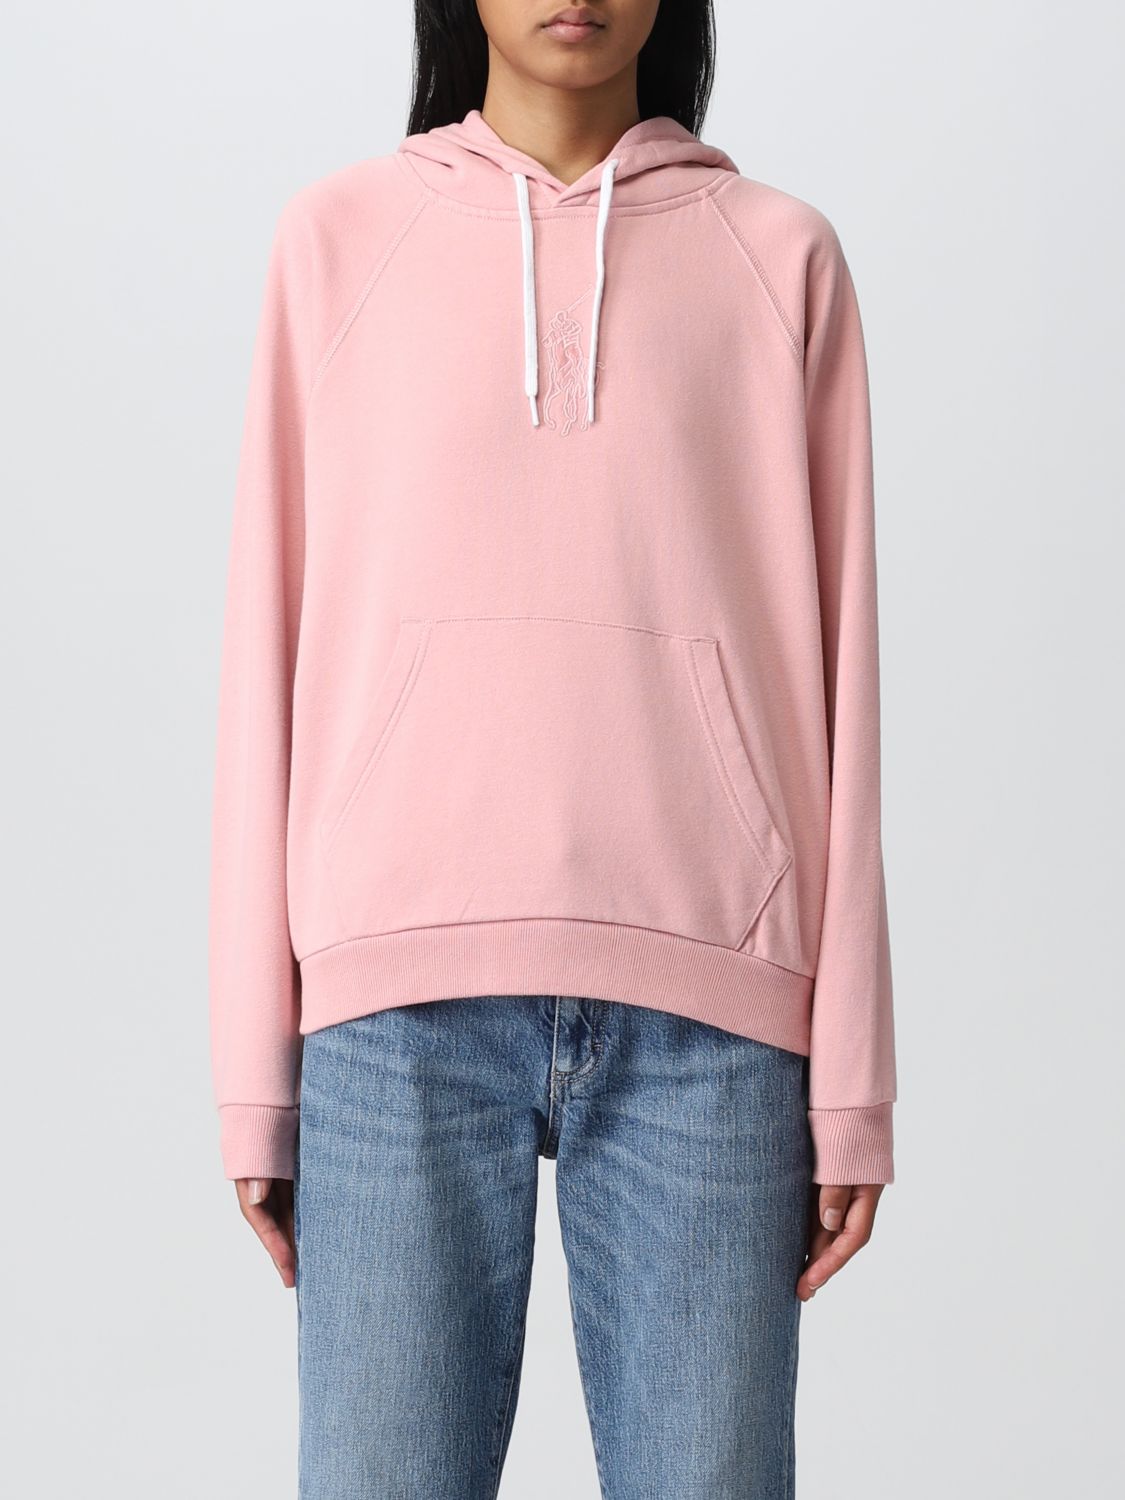 Polo Ralph Lauren Outlet: sweatshirt for woman - Pink | Polo Ralph Lauren  sweatshirt 211872989 online on 